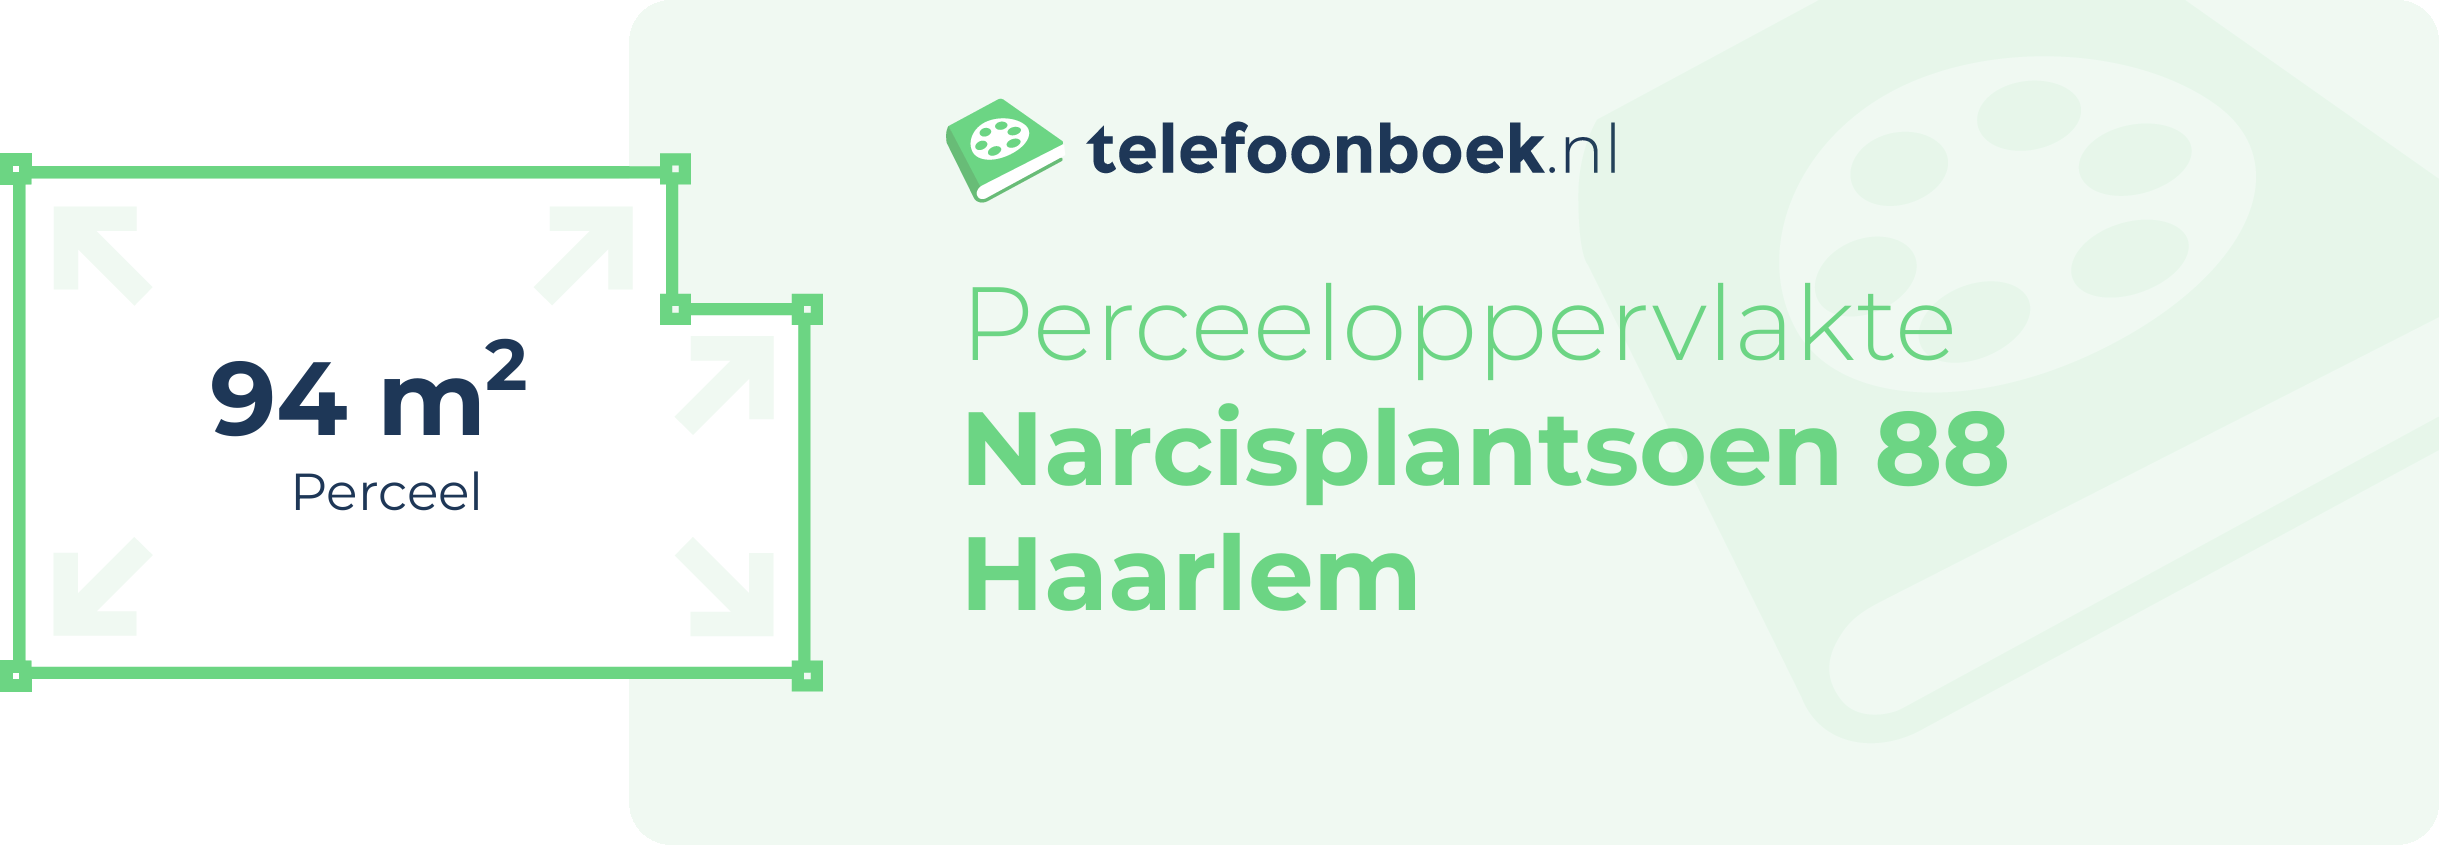 Perceeloppervlakte Narcisplantsoen 88 Haarlem